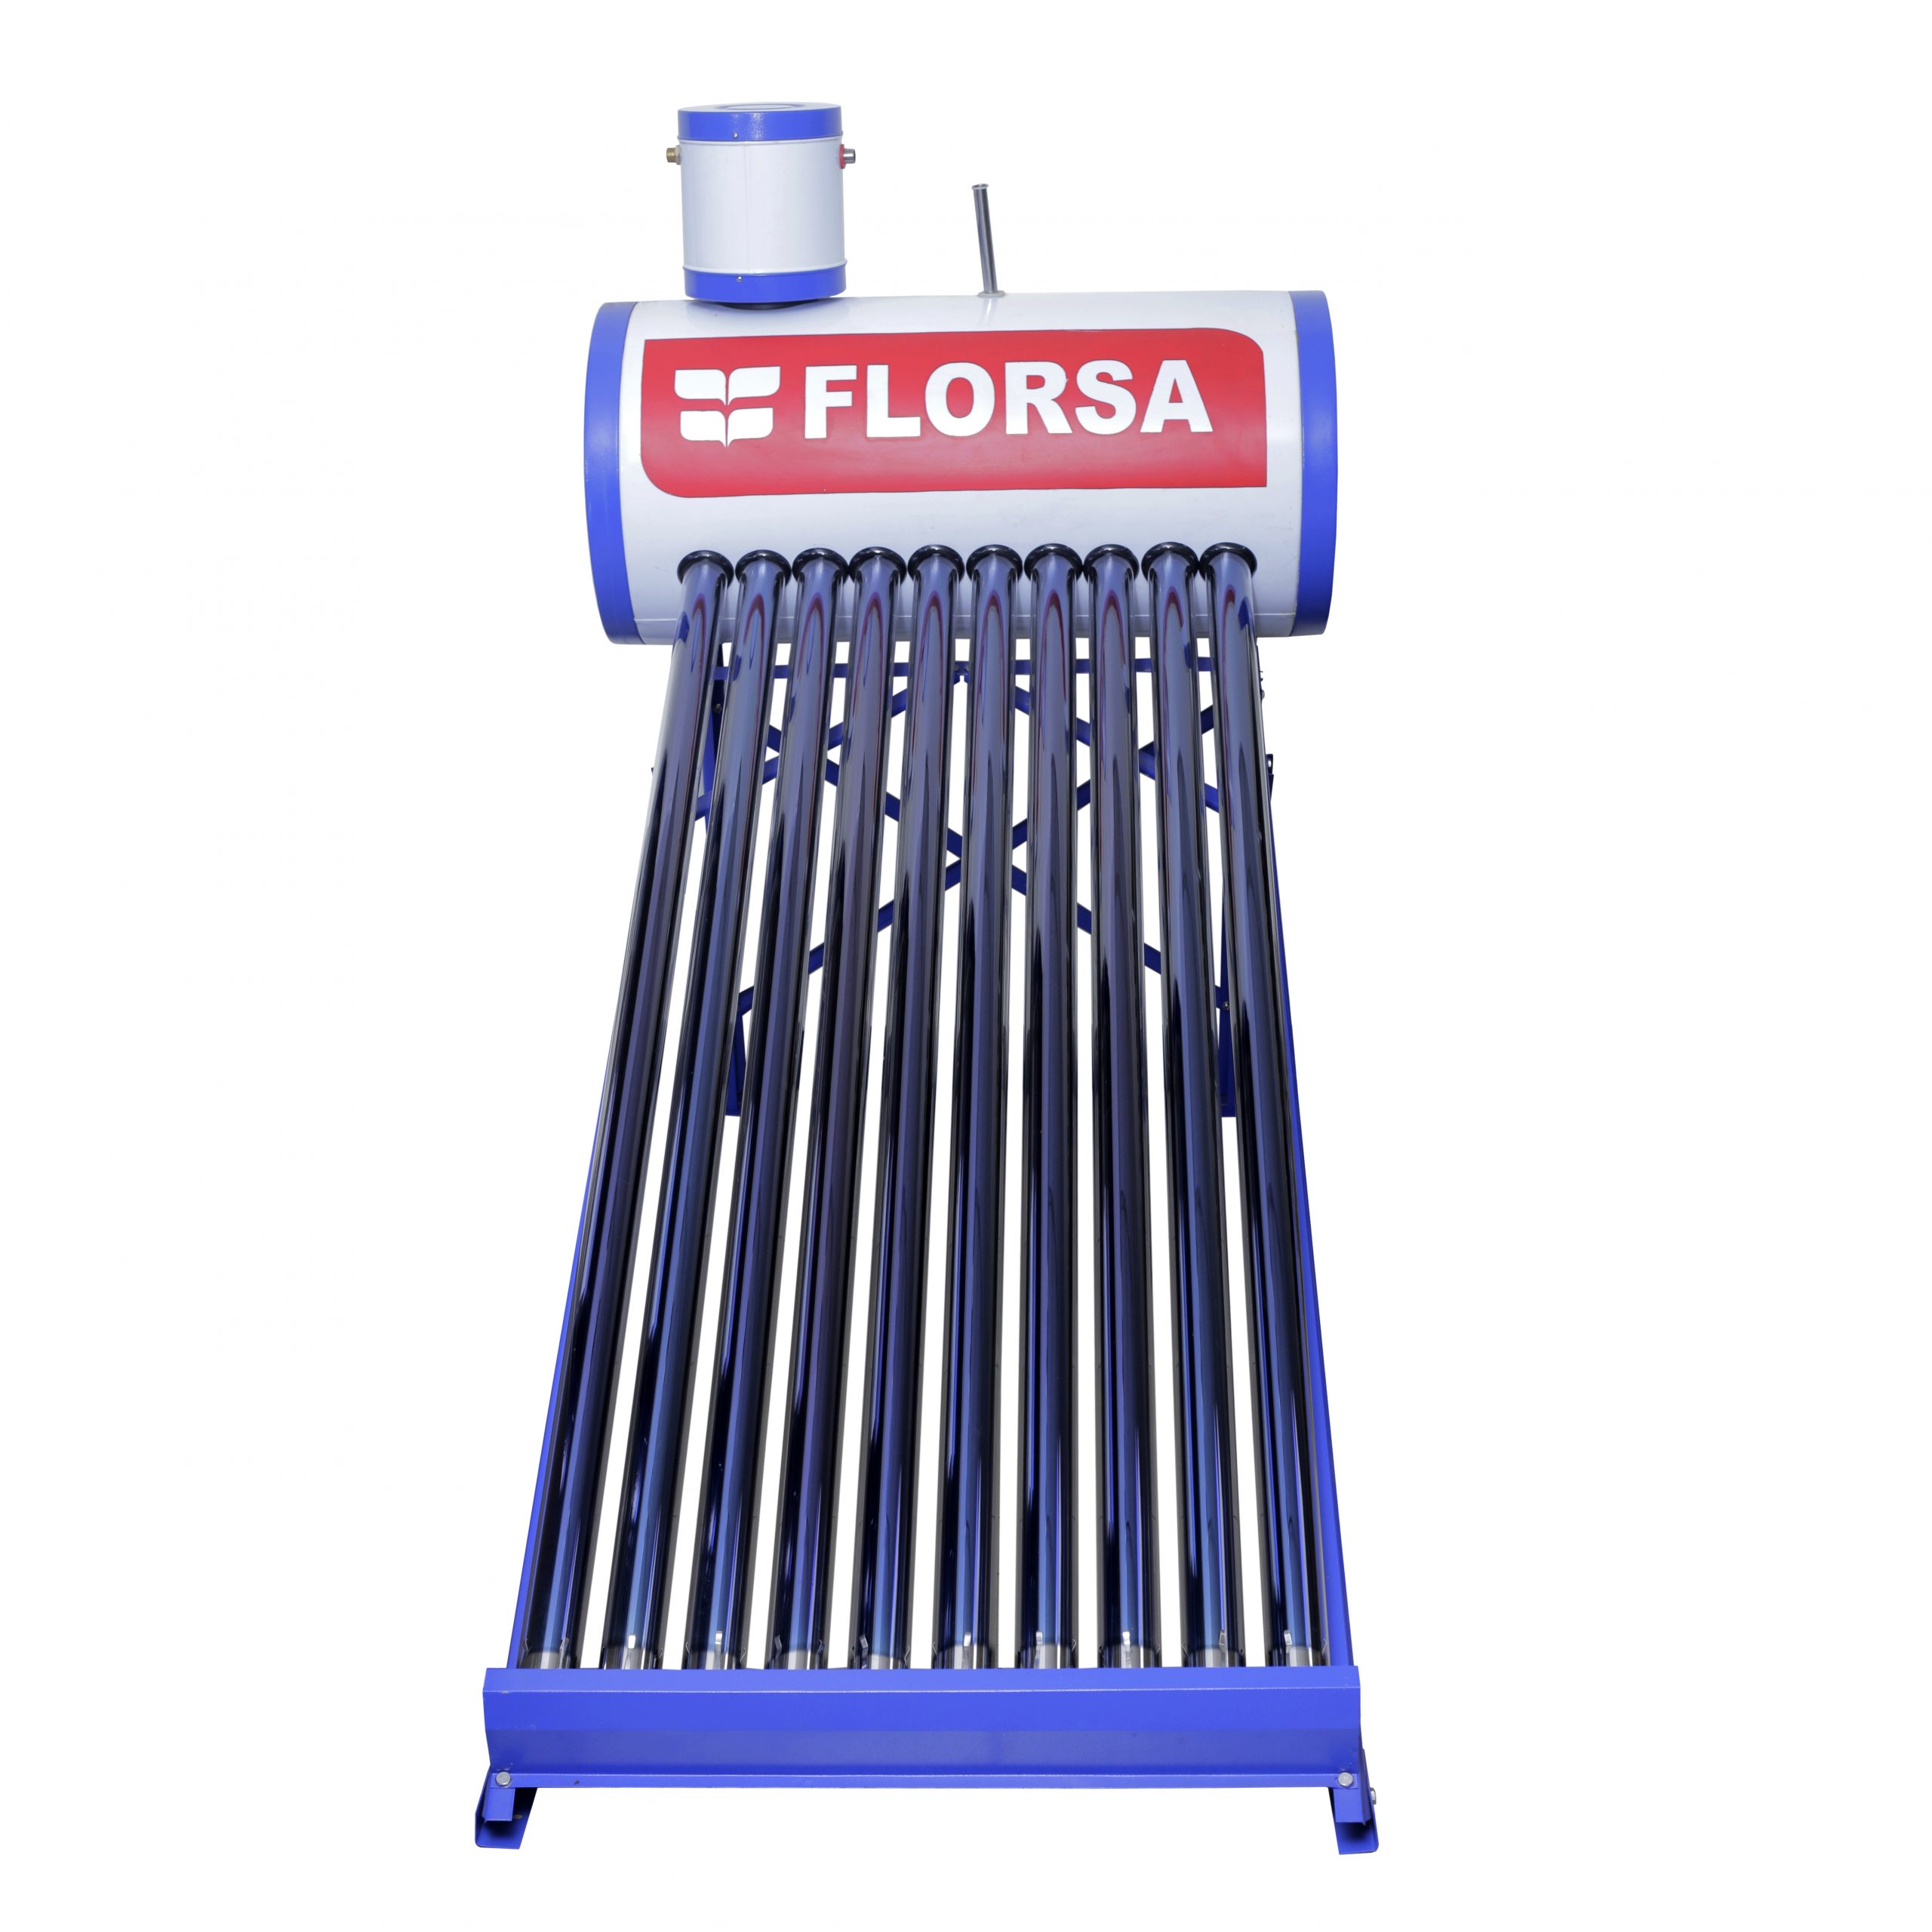 100L Solar Water Heater Direct tubular solar water - Florsa water heater